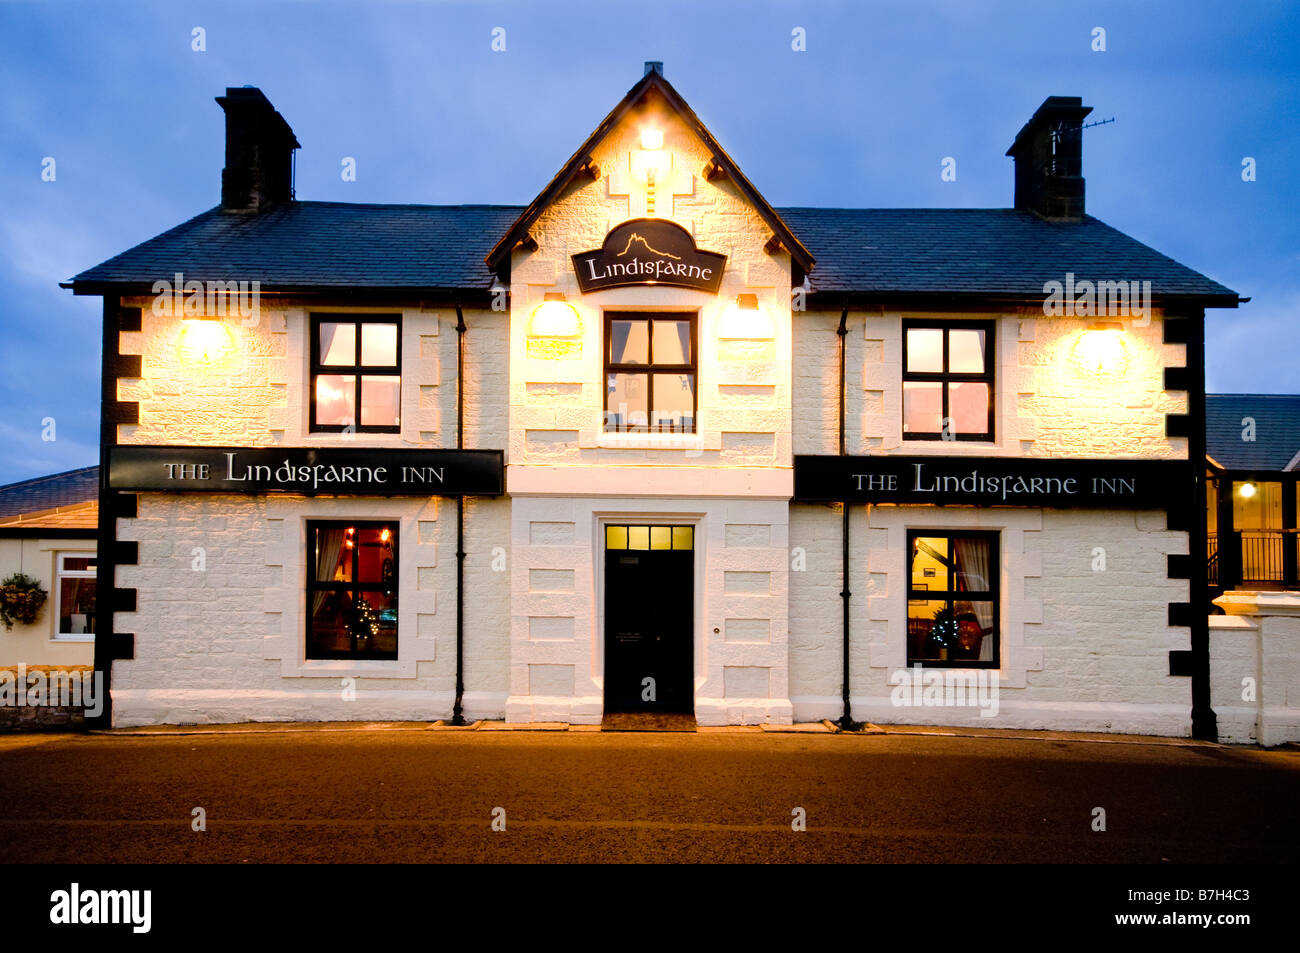 The Lindisfarne Inn at Beal Stock Photo